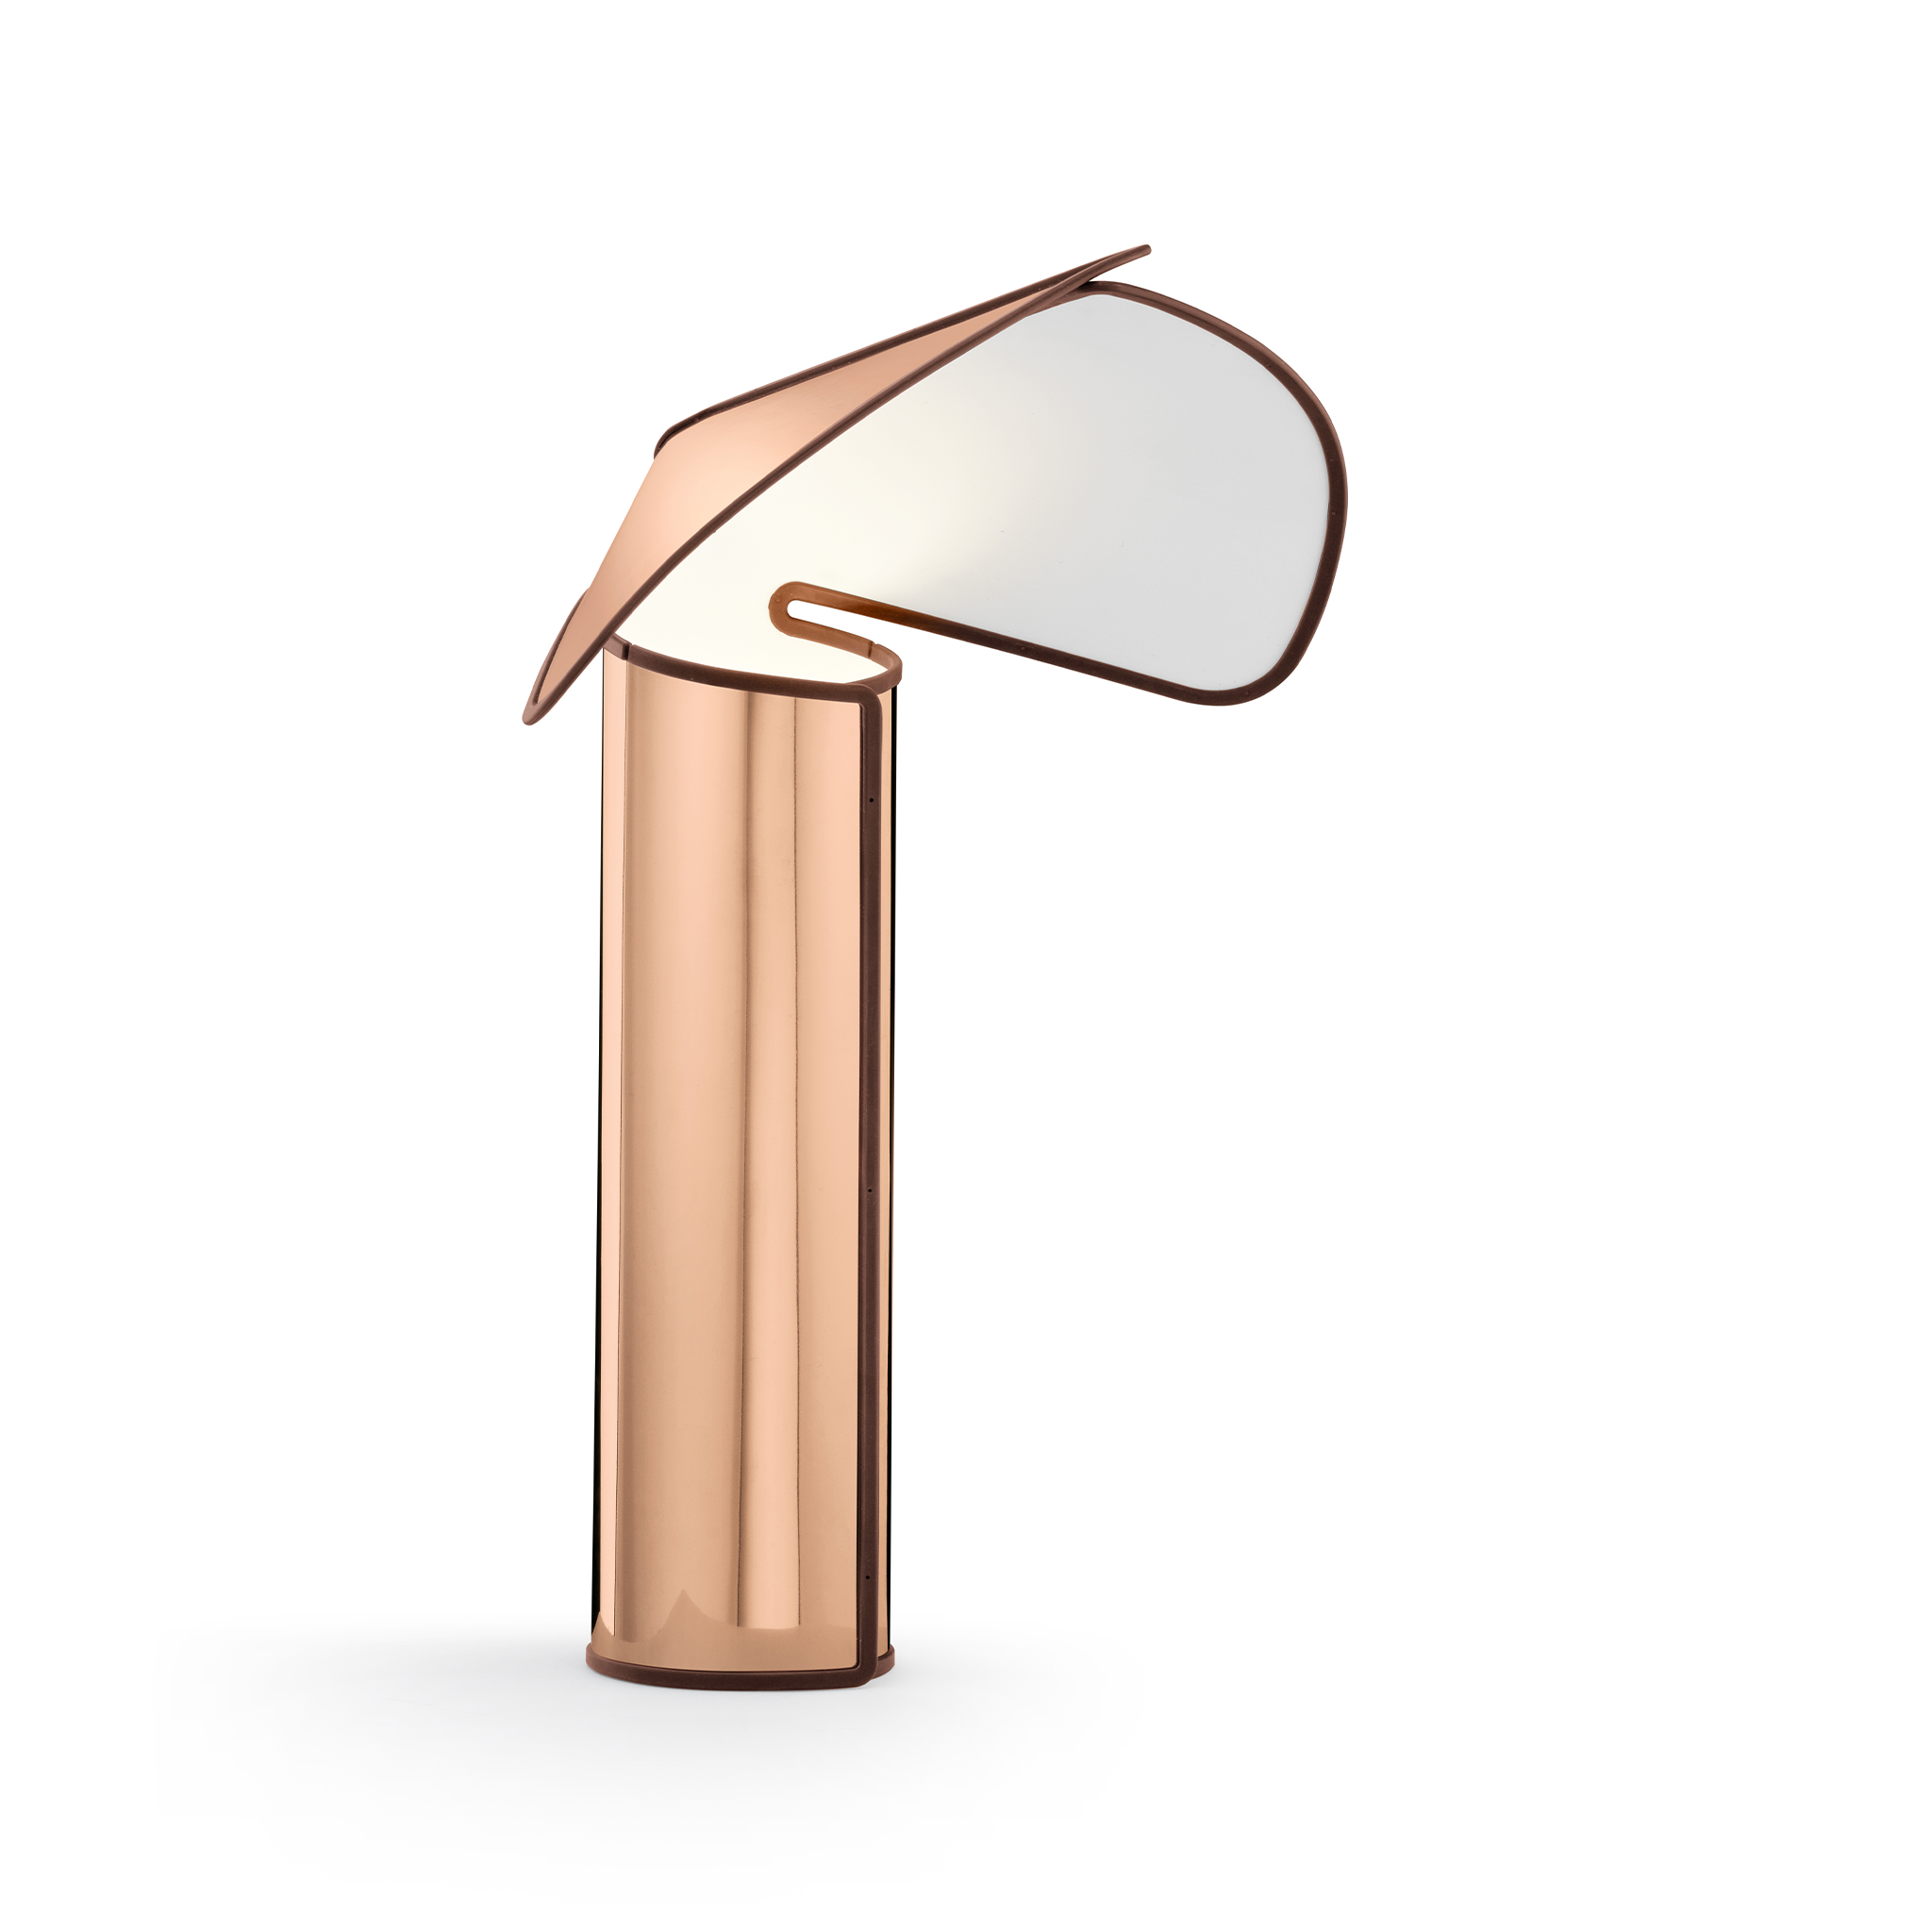 Chiara Table Lamp by Mario Bellini for Flos